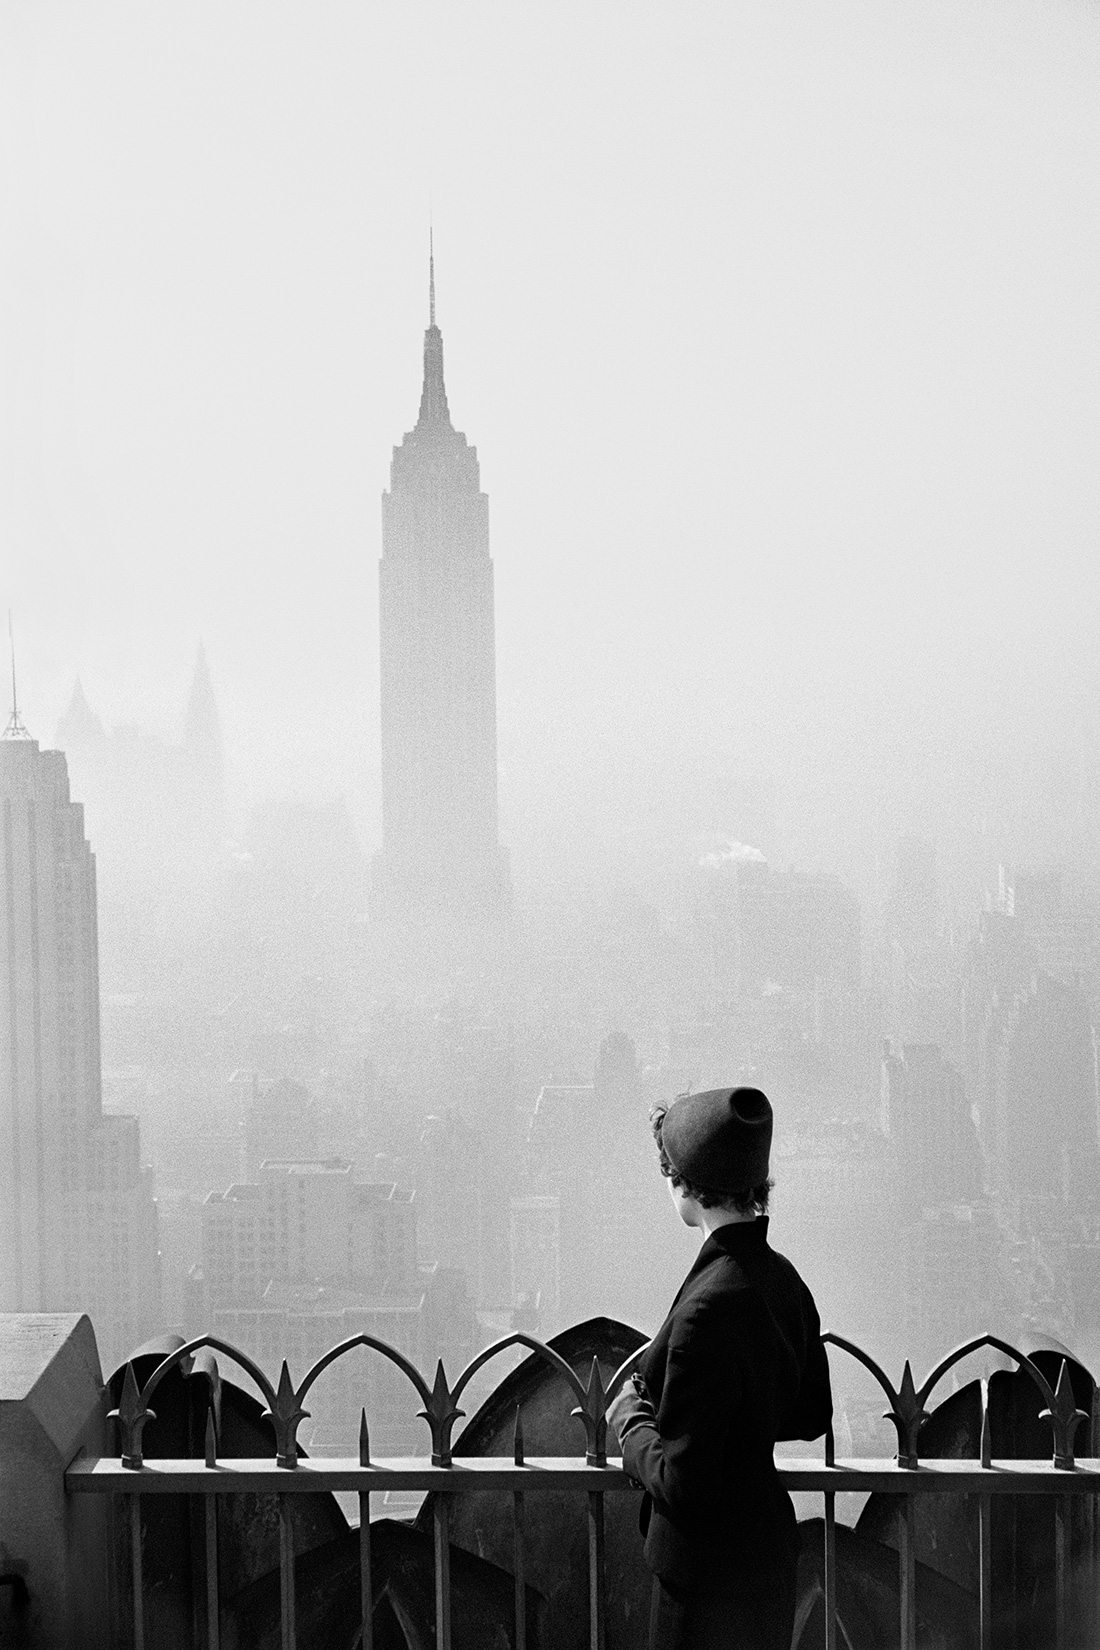 New York City, New York, USA. 1955. Credit: ELLIOT ERWITT/MAGNUM PHOTOS